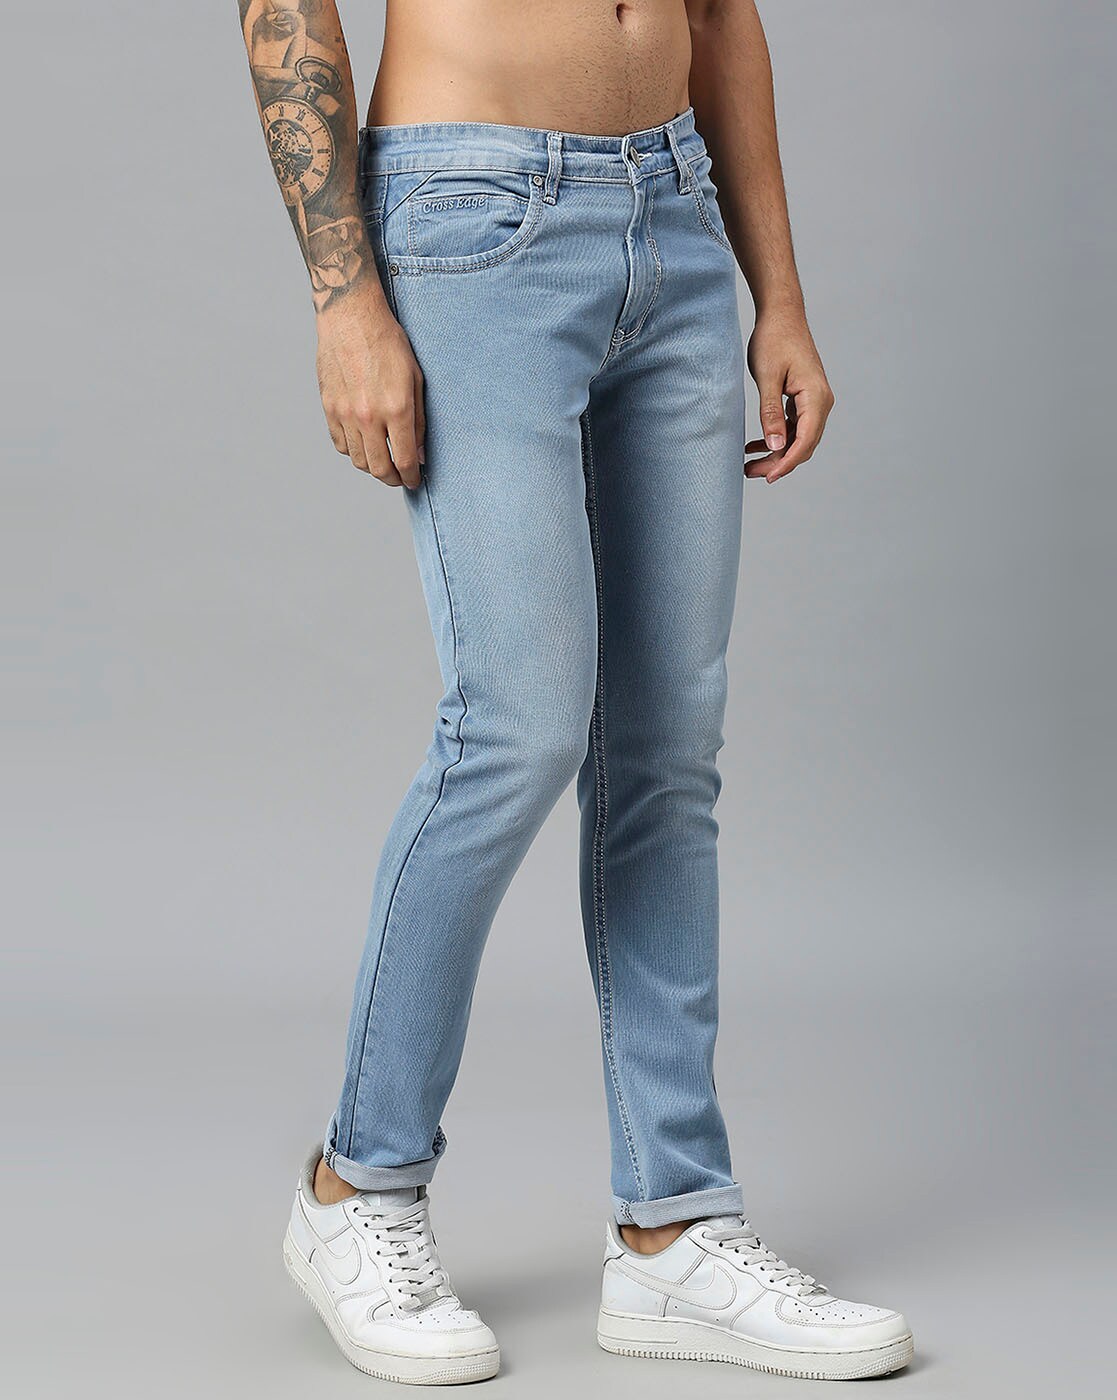 Men's Skinny Fit Jeans - Skinny Jeans Styles - Express